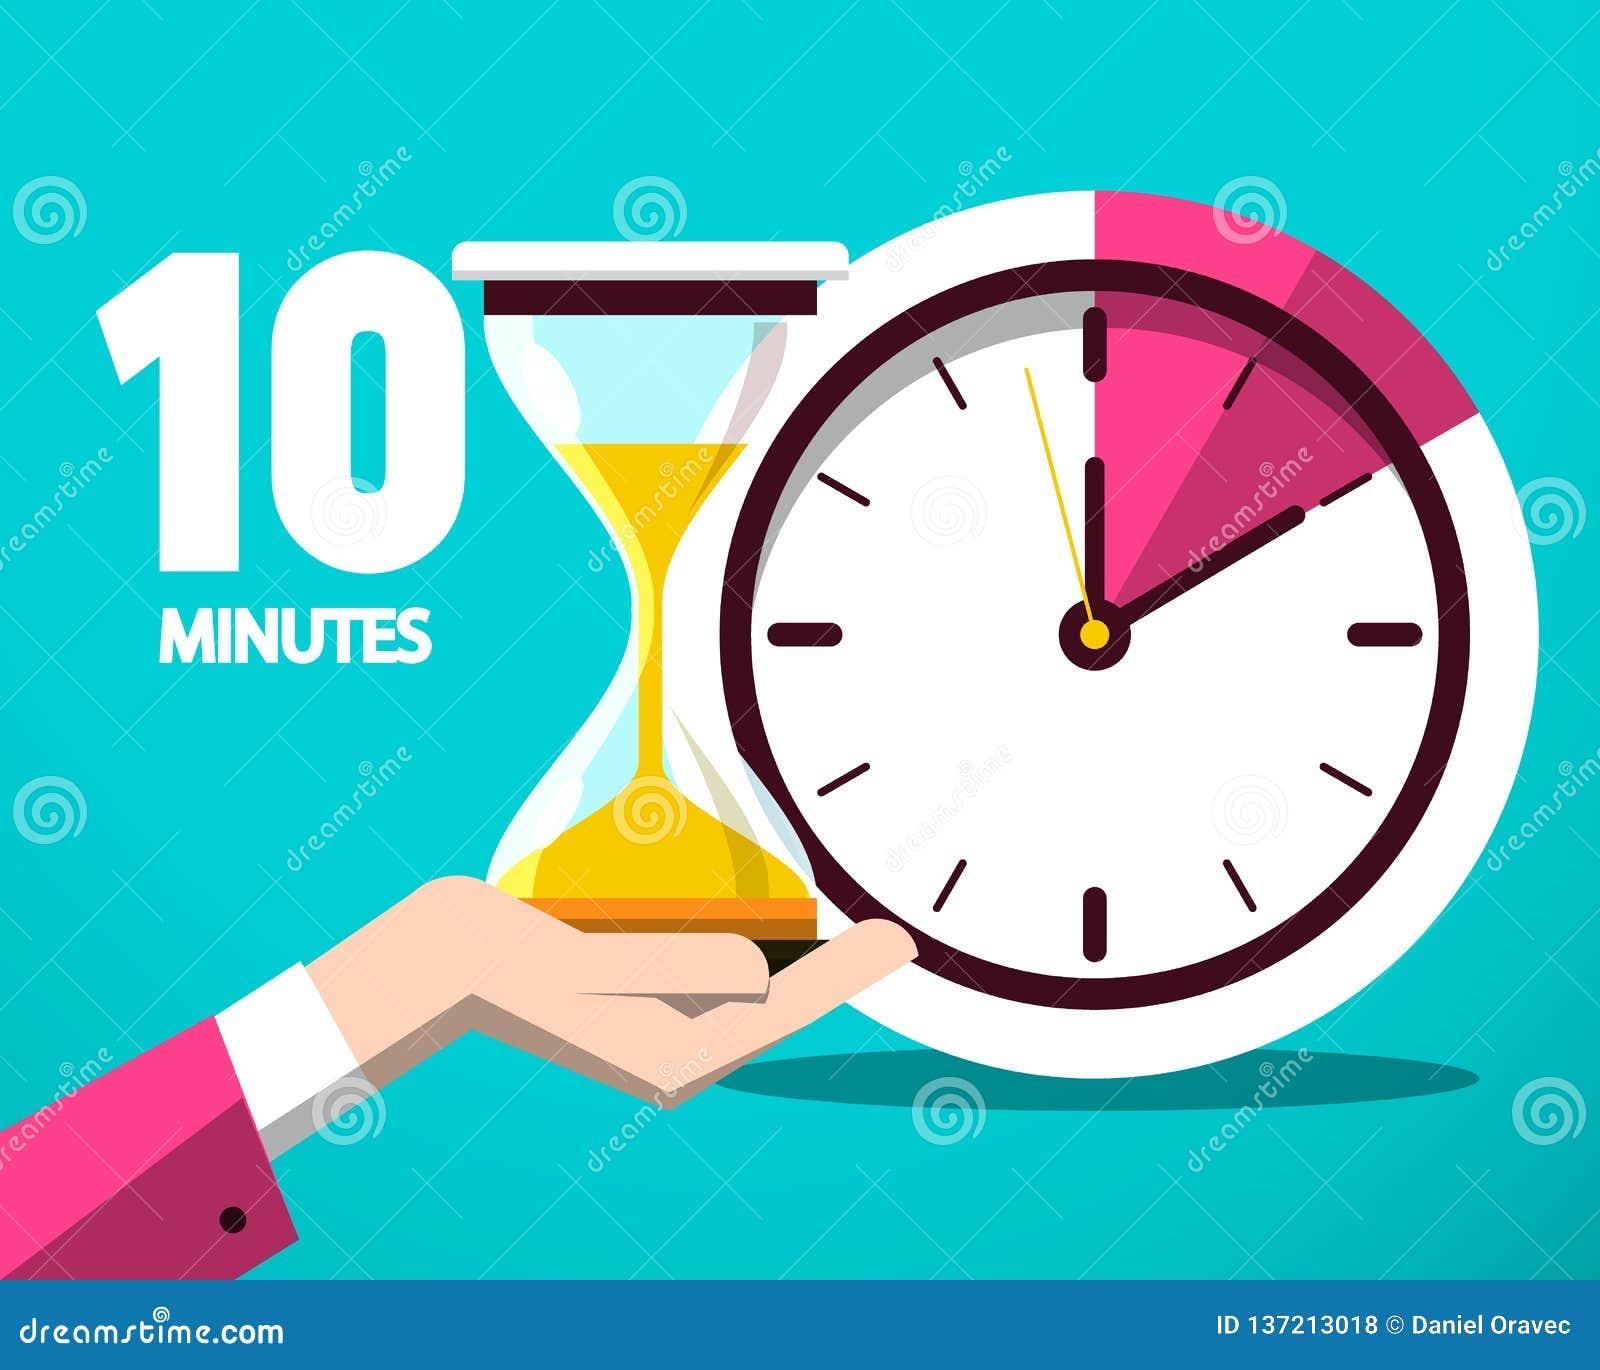 10 25 45 минут. 10 Minutes. Ten minutes время. 10 Minutes picture. Counter Clock.